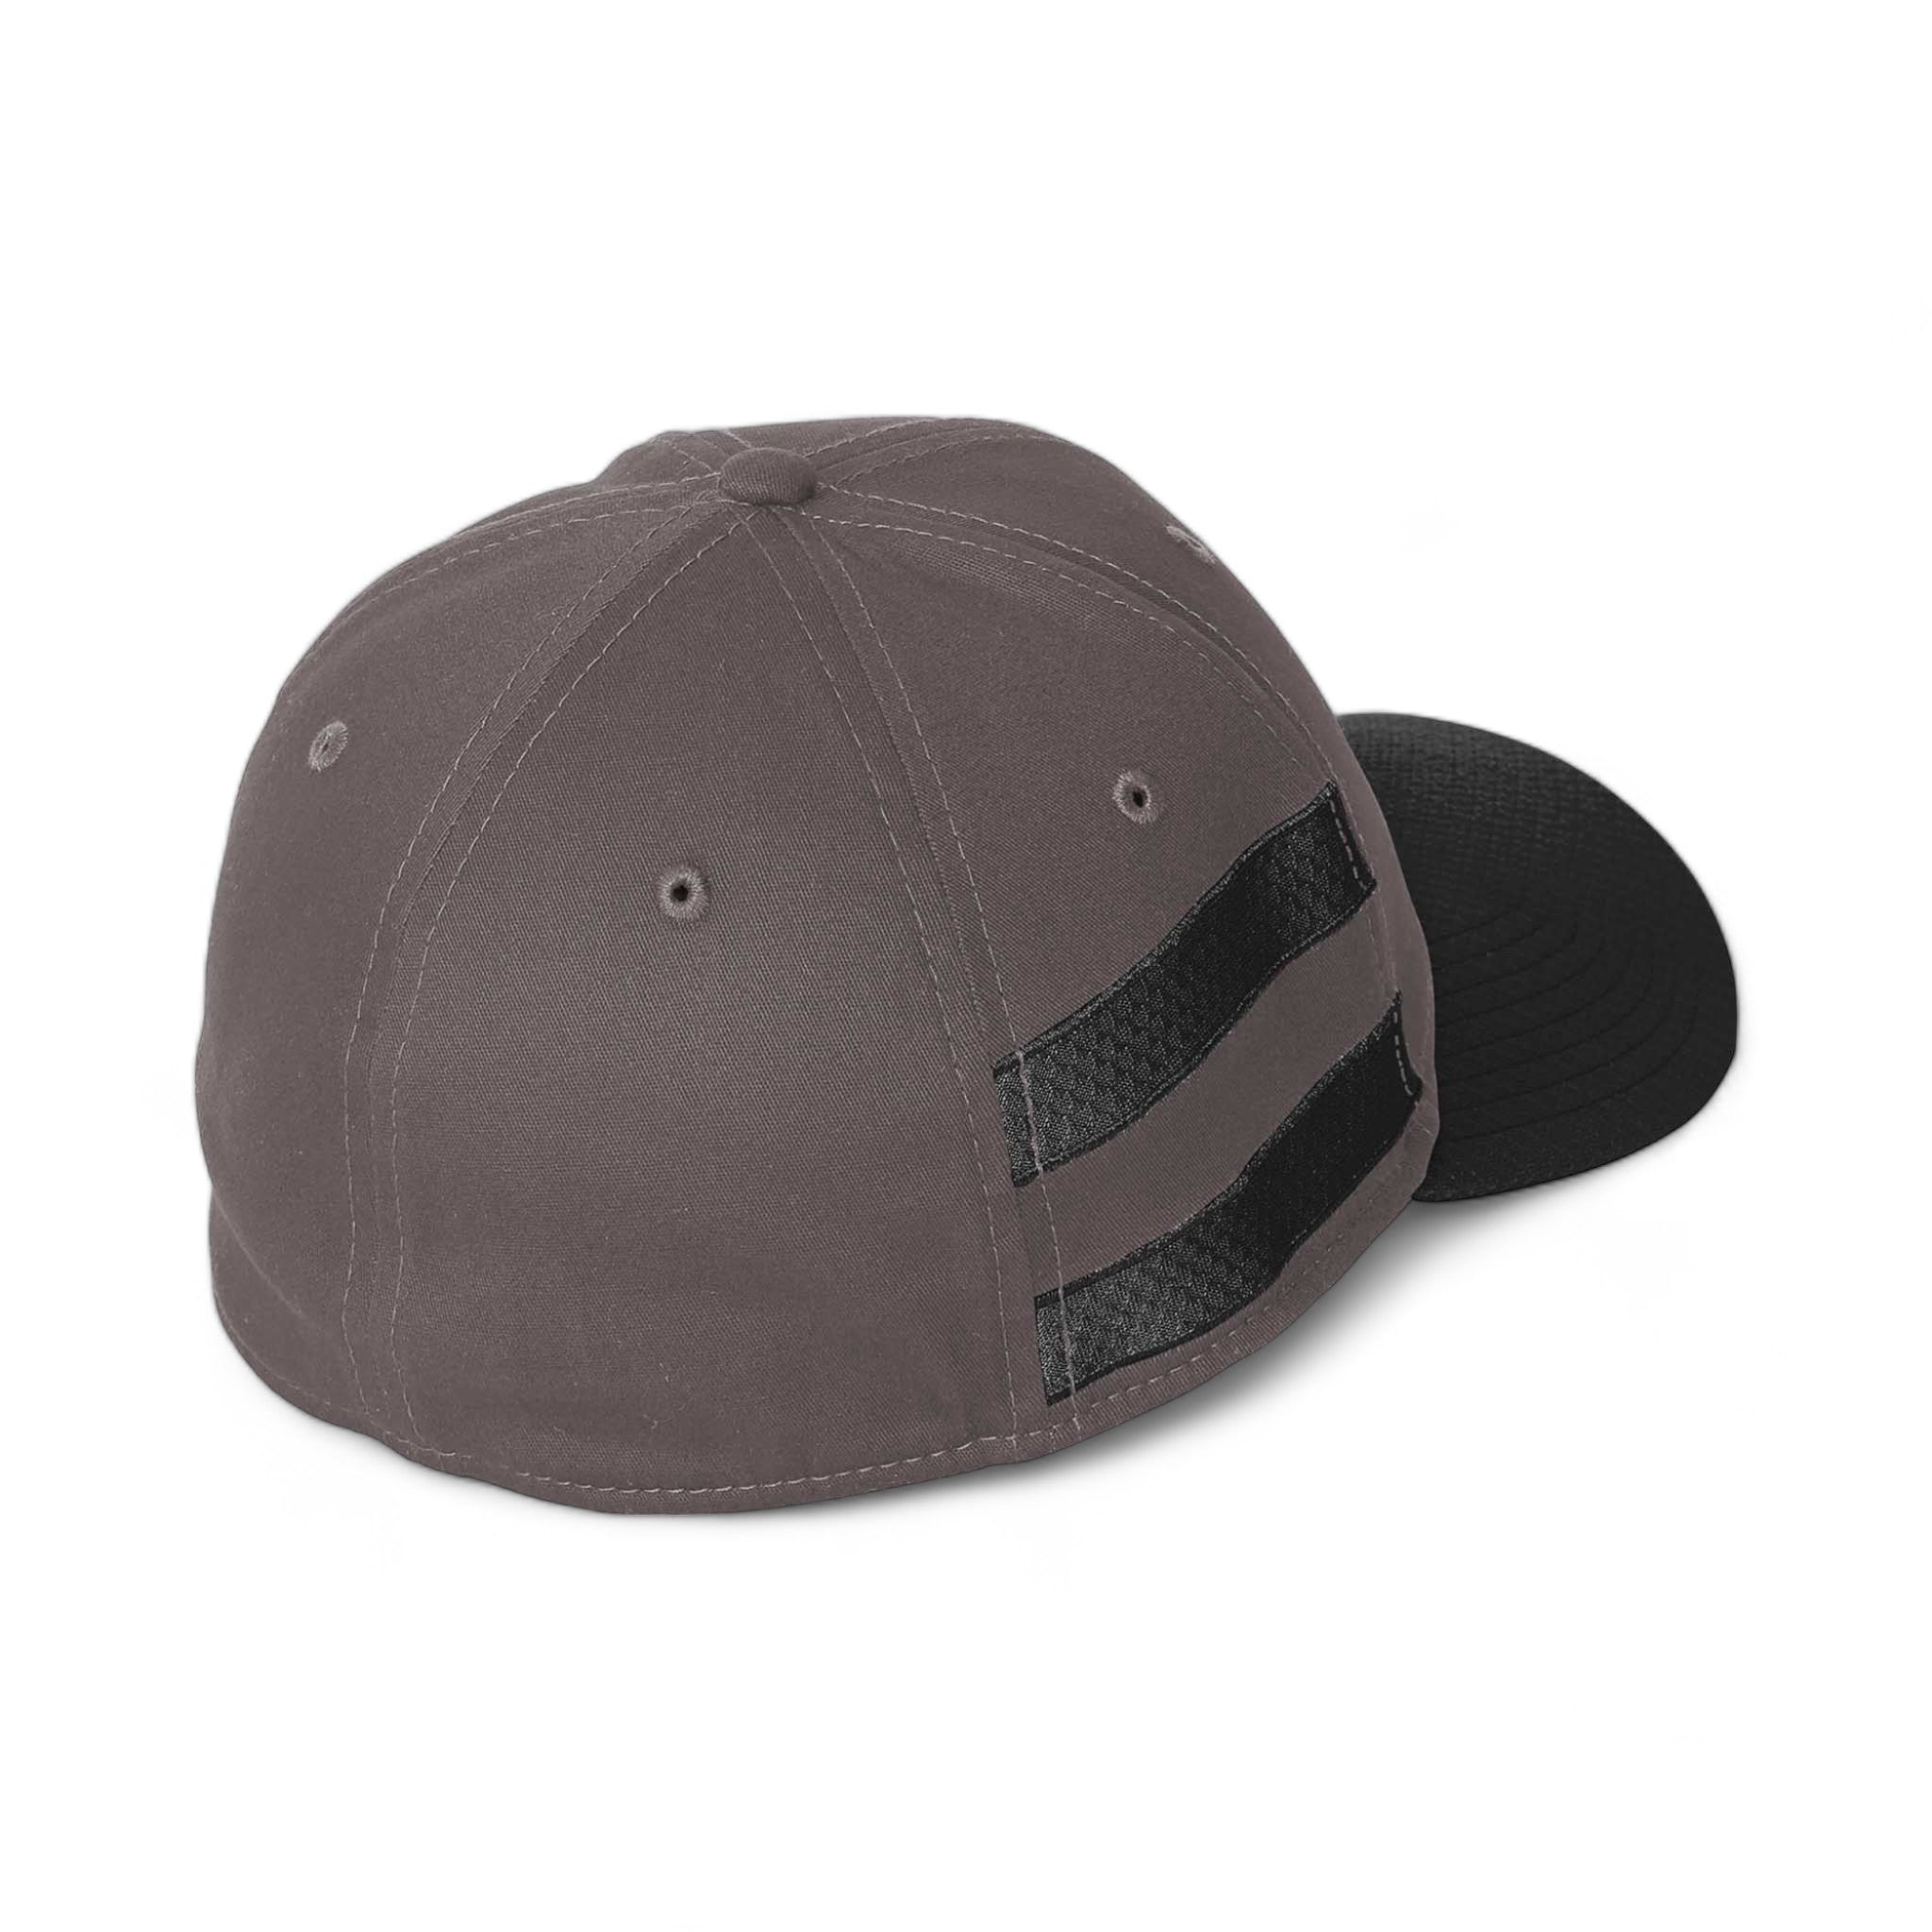 Back view of New Era NE1122 custom hat in graphite and black